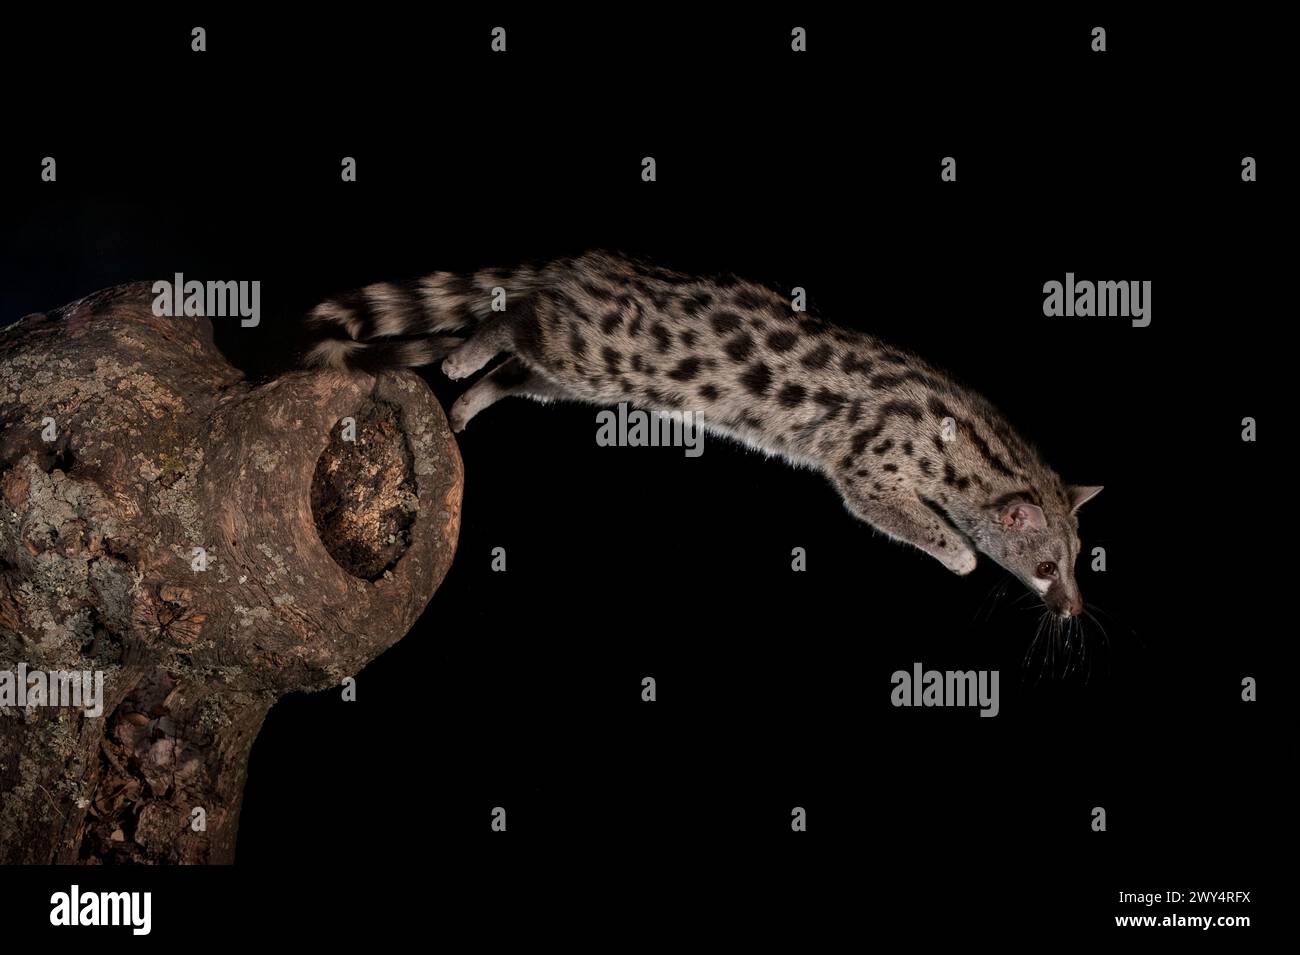 Common genet (Genetta genetta) jumping from trunk at night, Avila ,Spain - stock photo Stock Photo